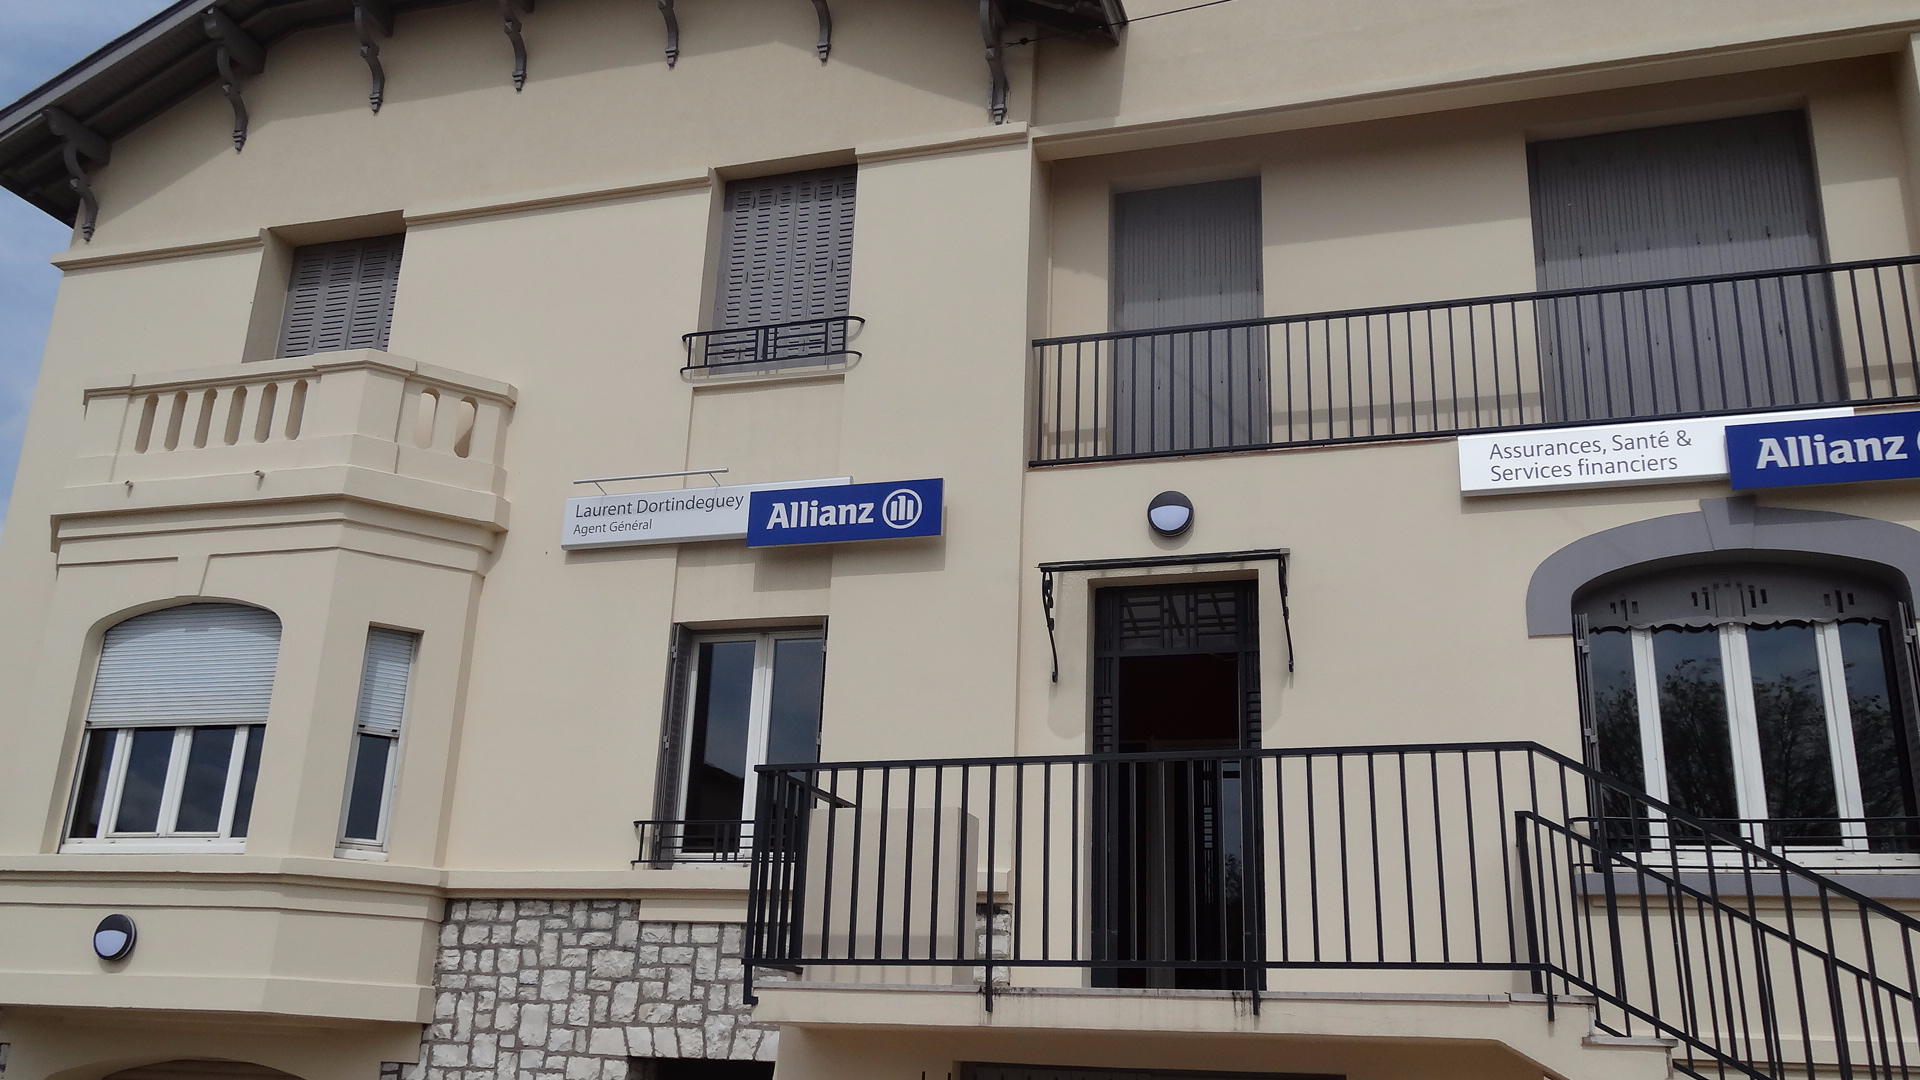 Allianz AVIGNON - Laurent DORTINDEGUEY